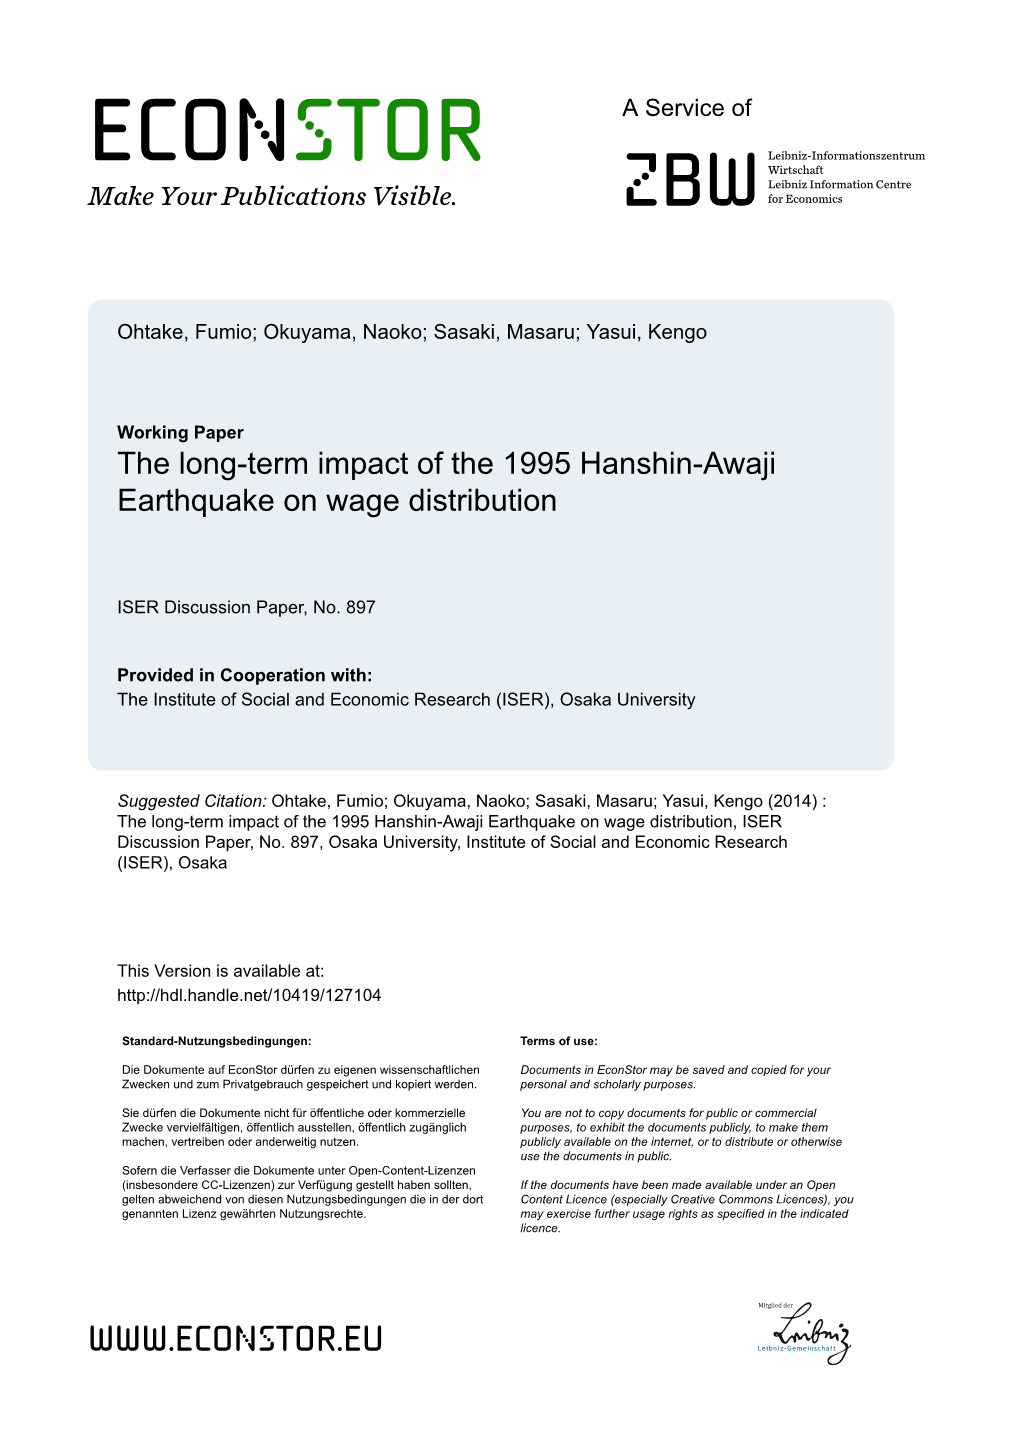 The Long-Term Impact of the 1995 Hanshin-Awaji Earthquake on Wage Distribution